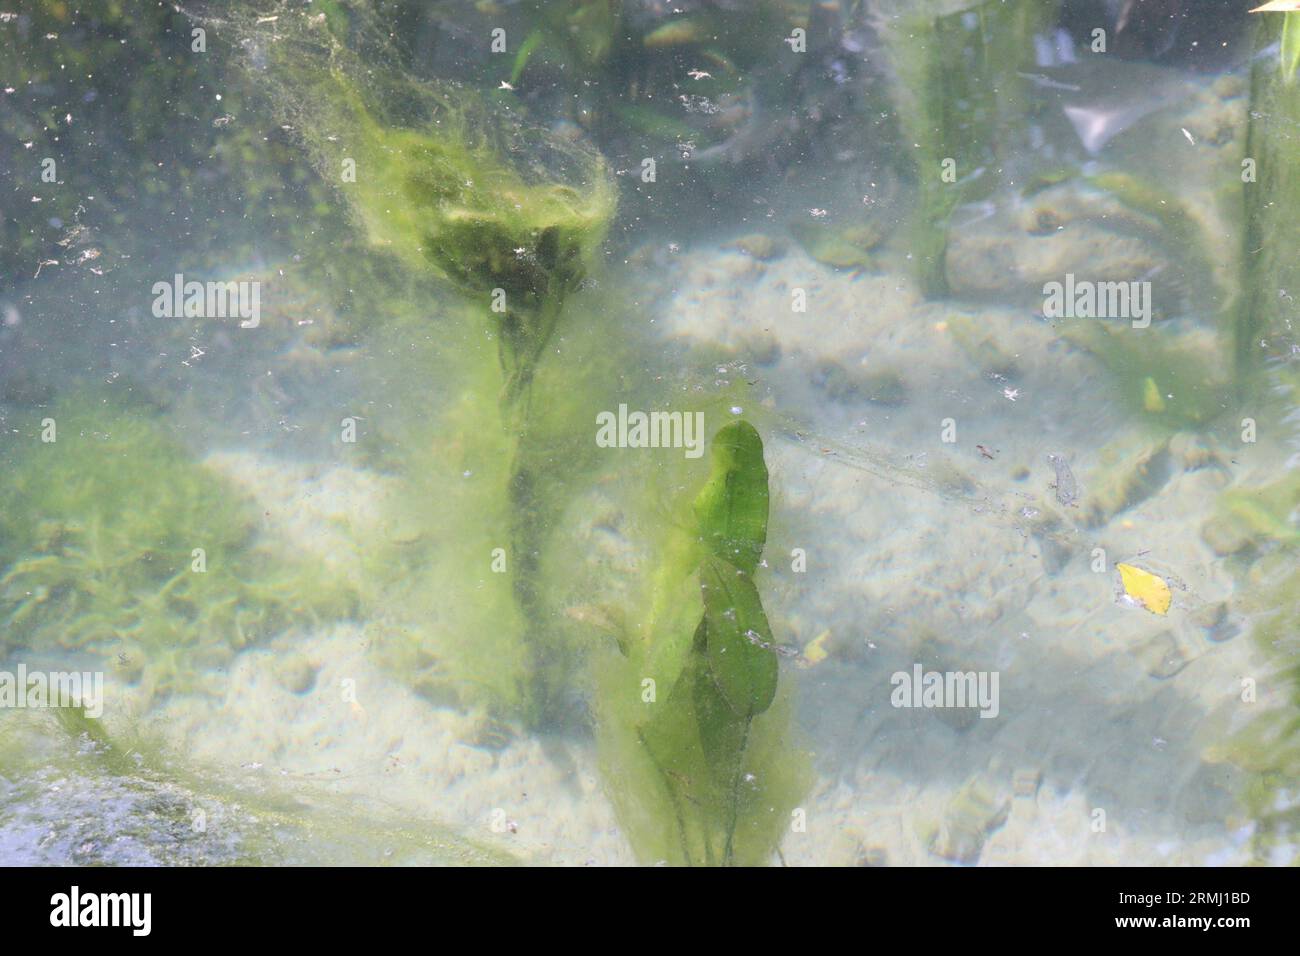 Enteromorpha intestinalis green alga in water for decoration Stock Photo